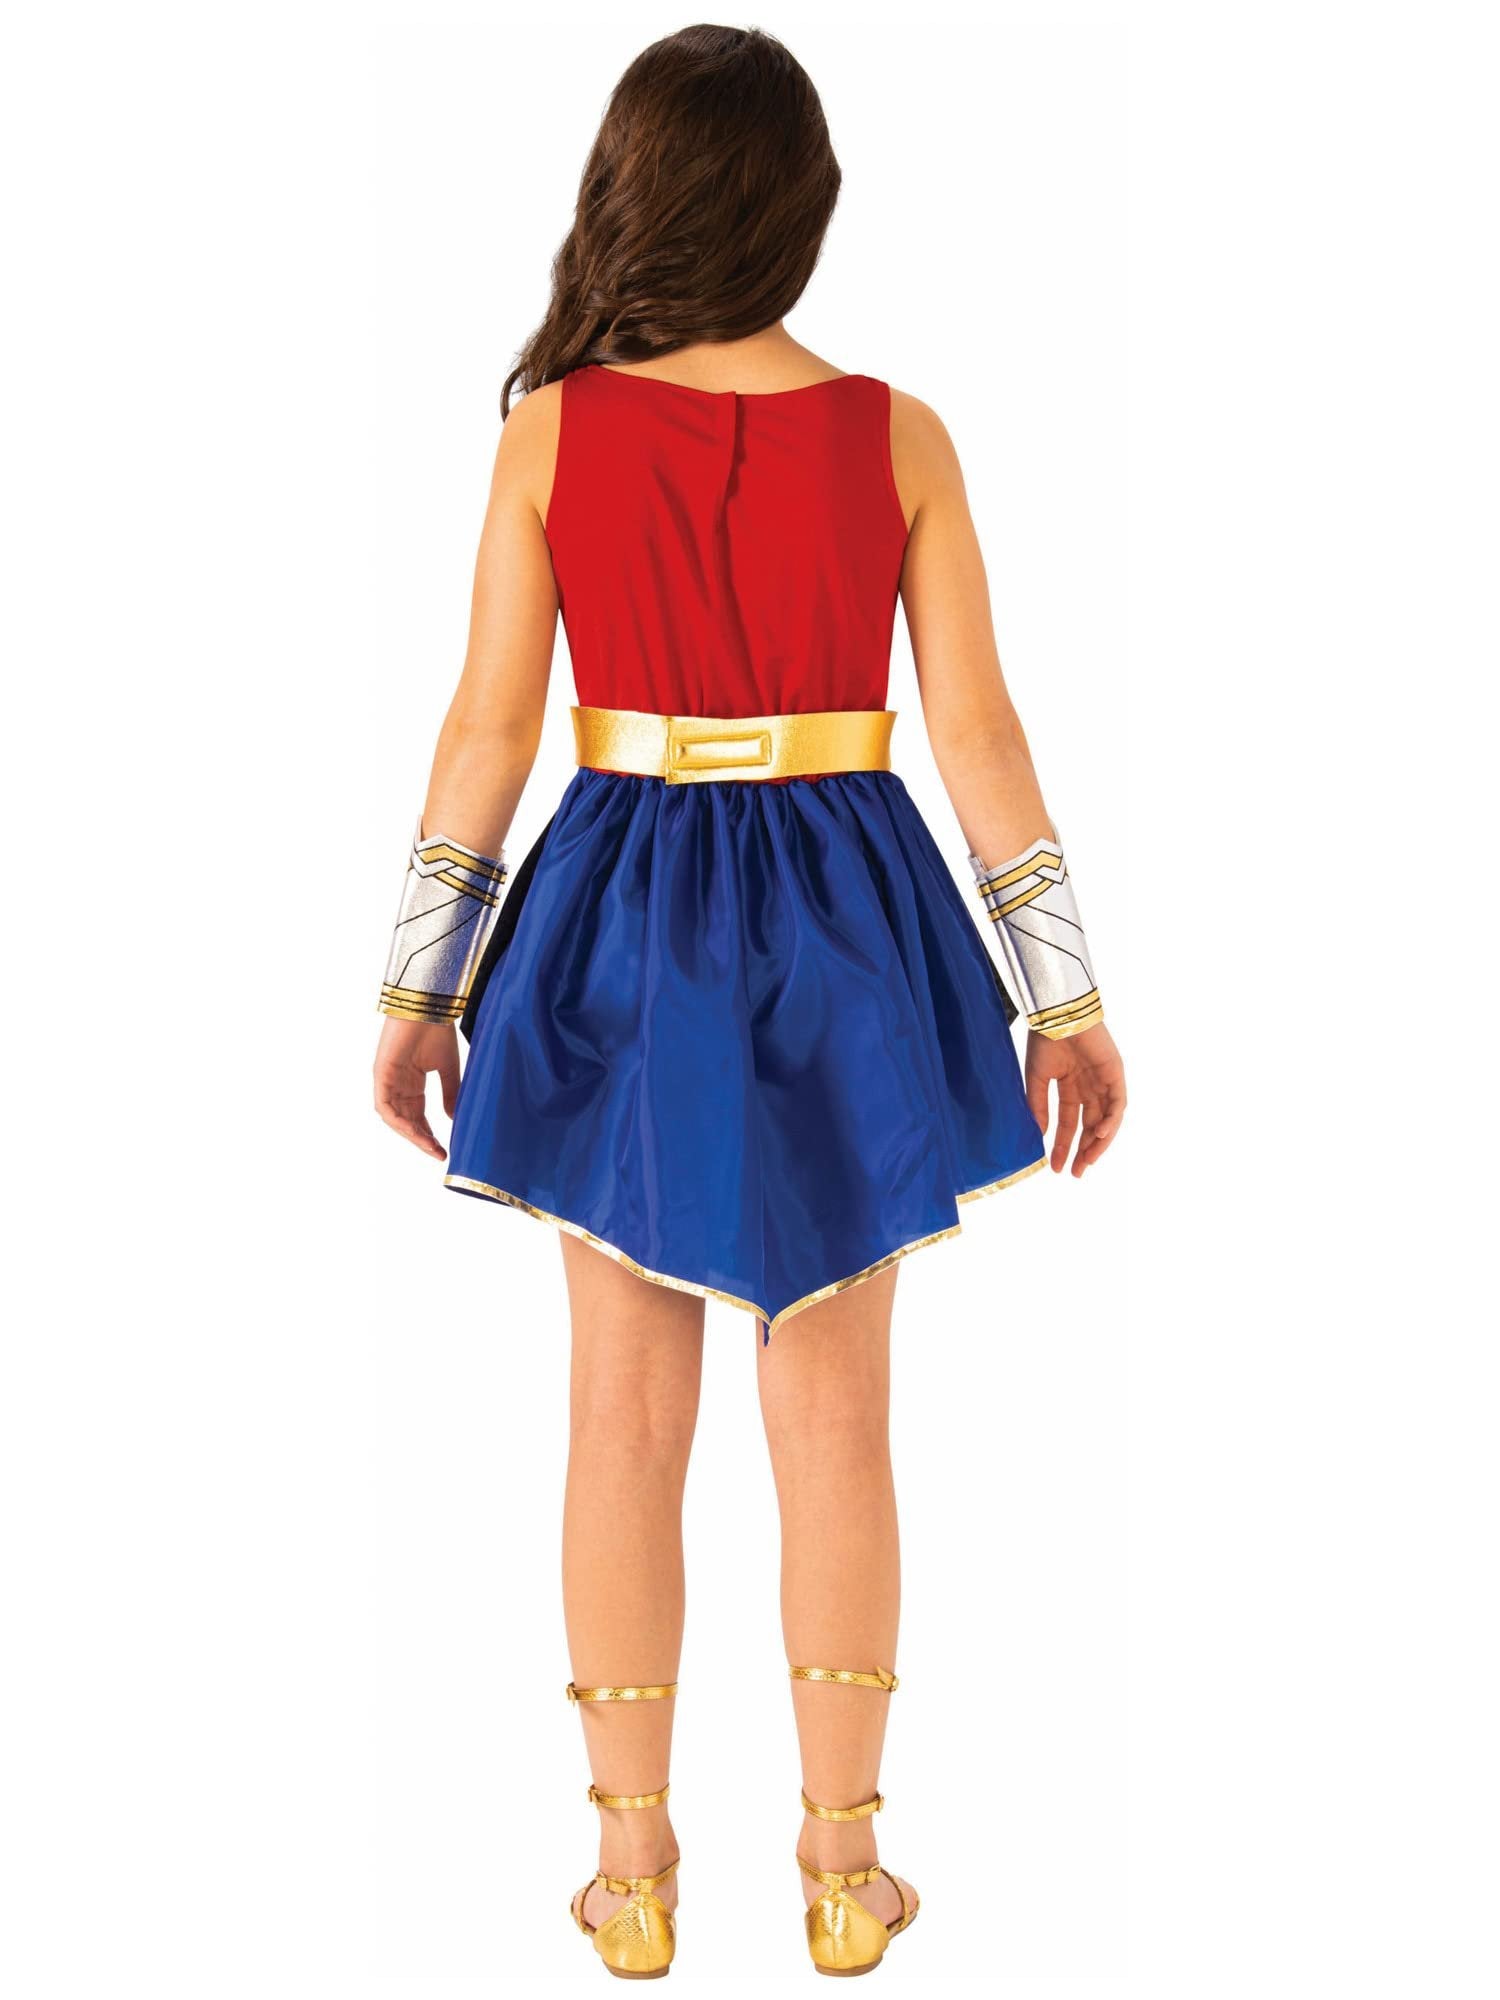 Rubie's Girl's DC Comics WW84 Deluxe Wonder Woman Costume Dress with Gauntlets and Tiara, Medium